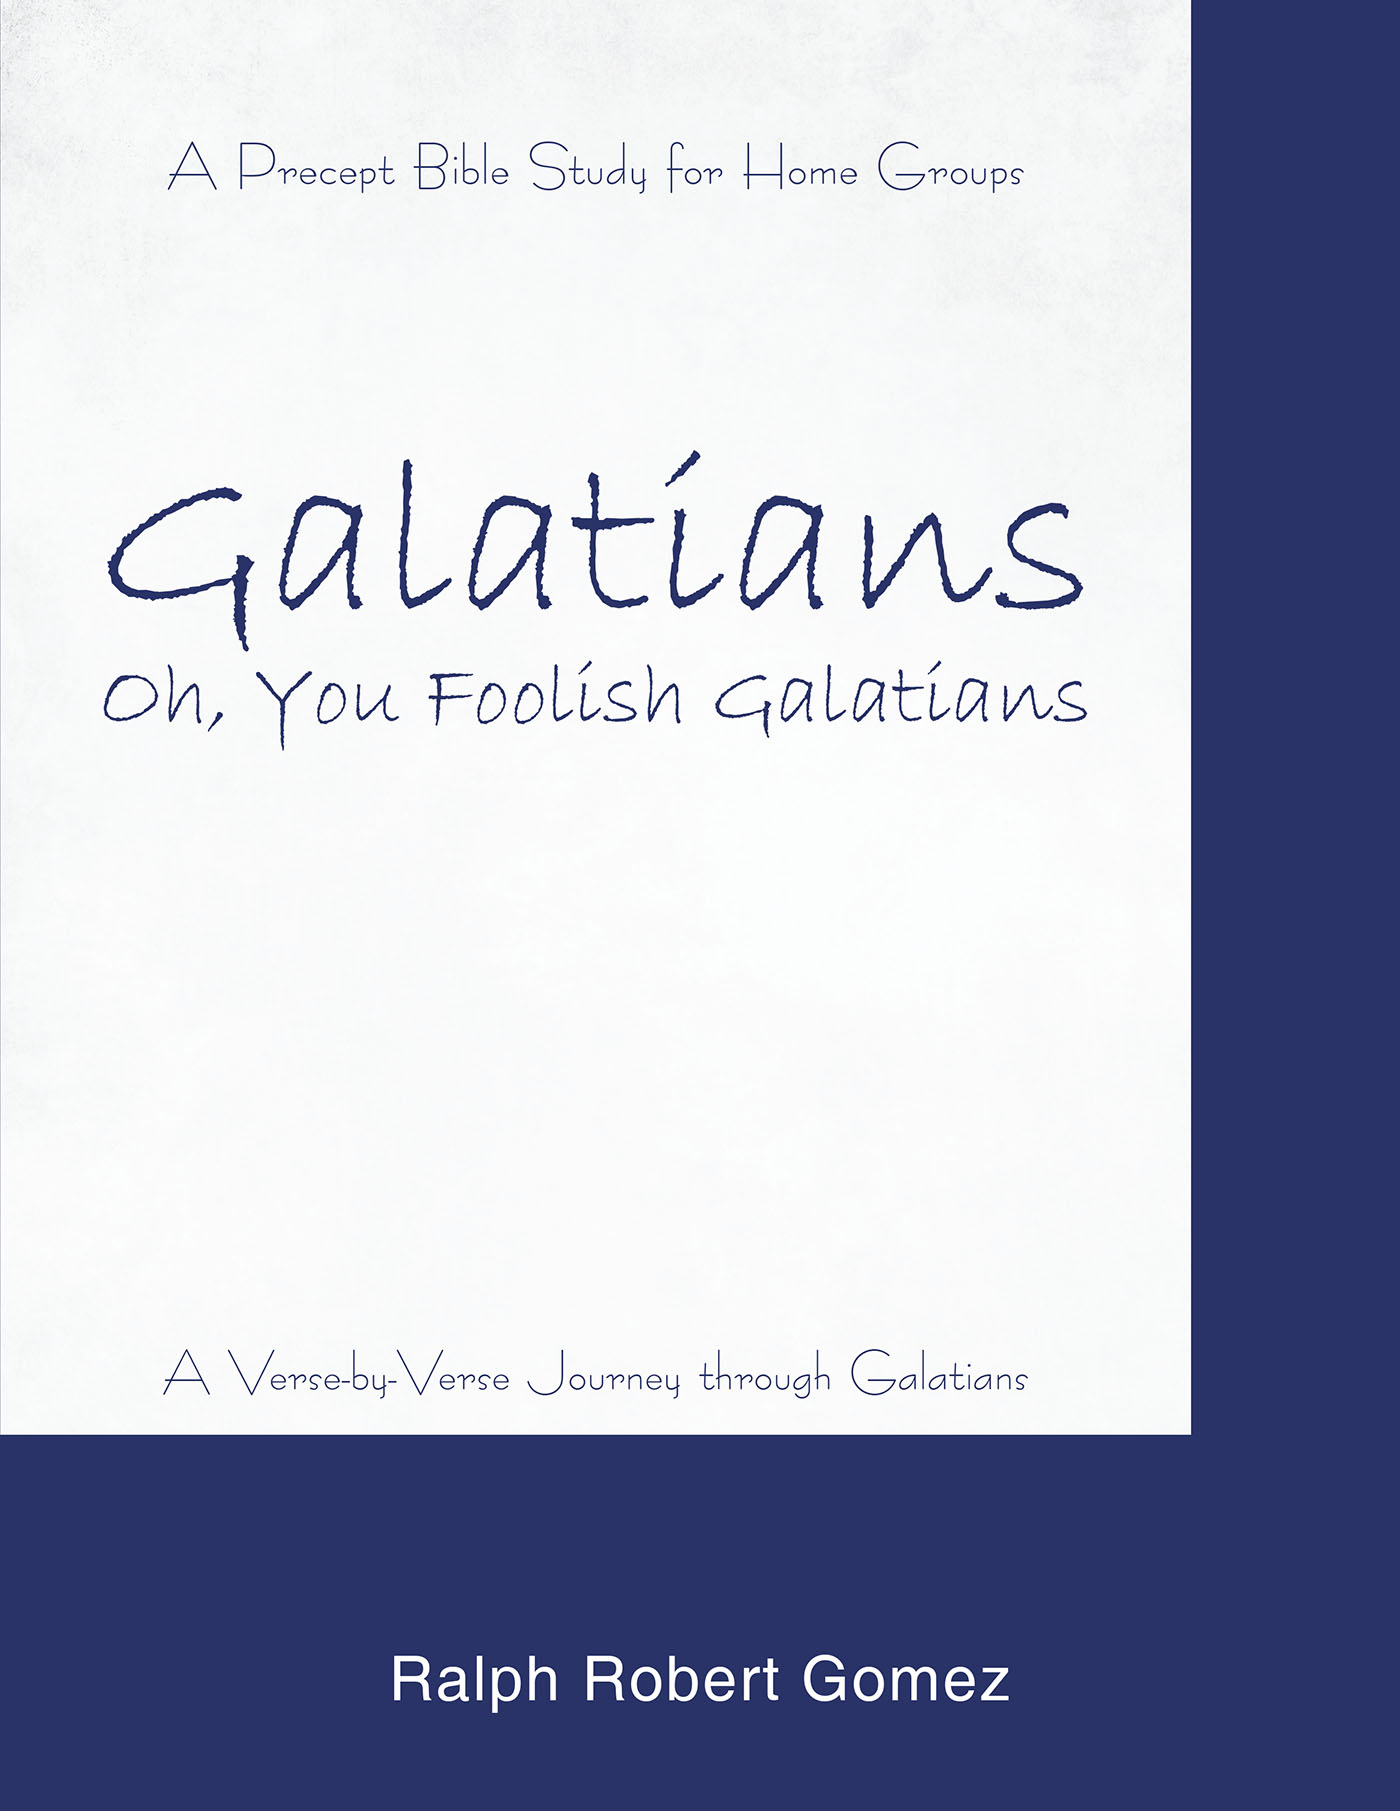 Author Ralph Robert Gomez’s New Book, "Galatians: Oh, You Foolish Galatians," is a Comprehensive Precept Bible Study for Home Groups